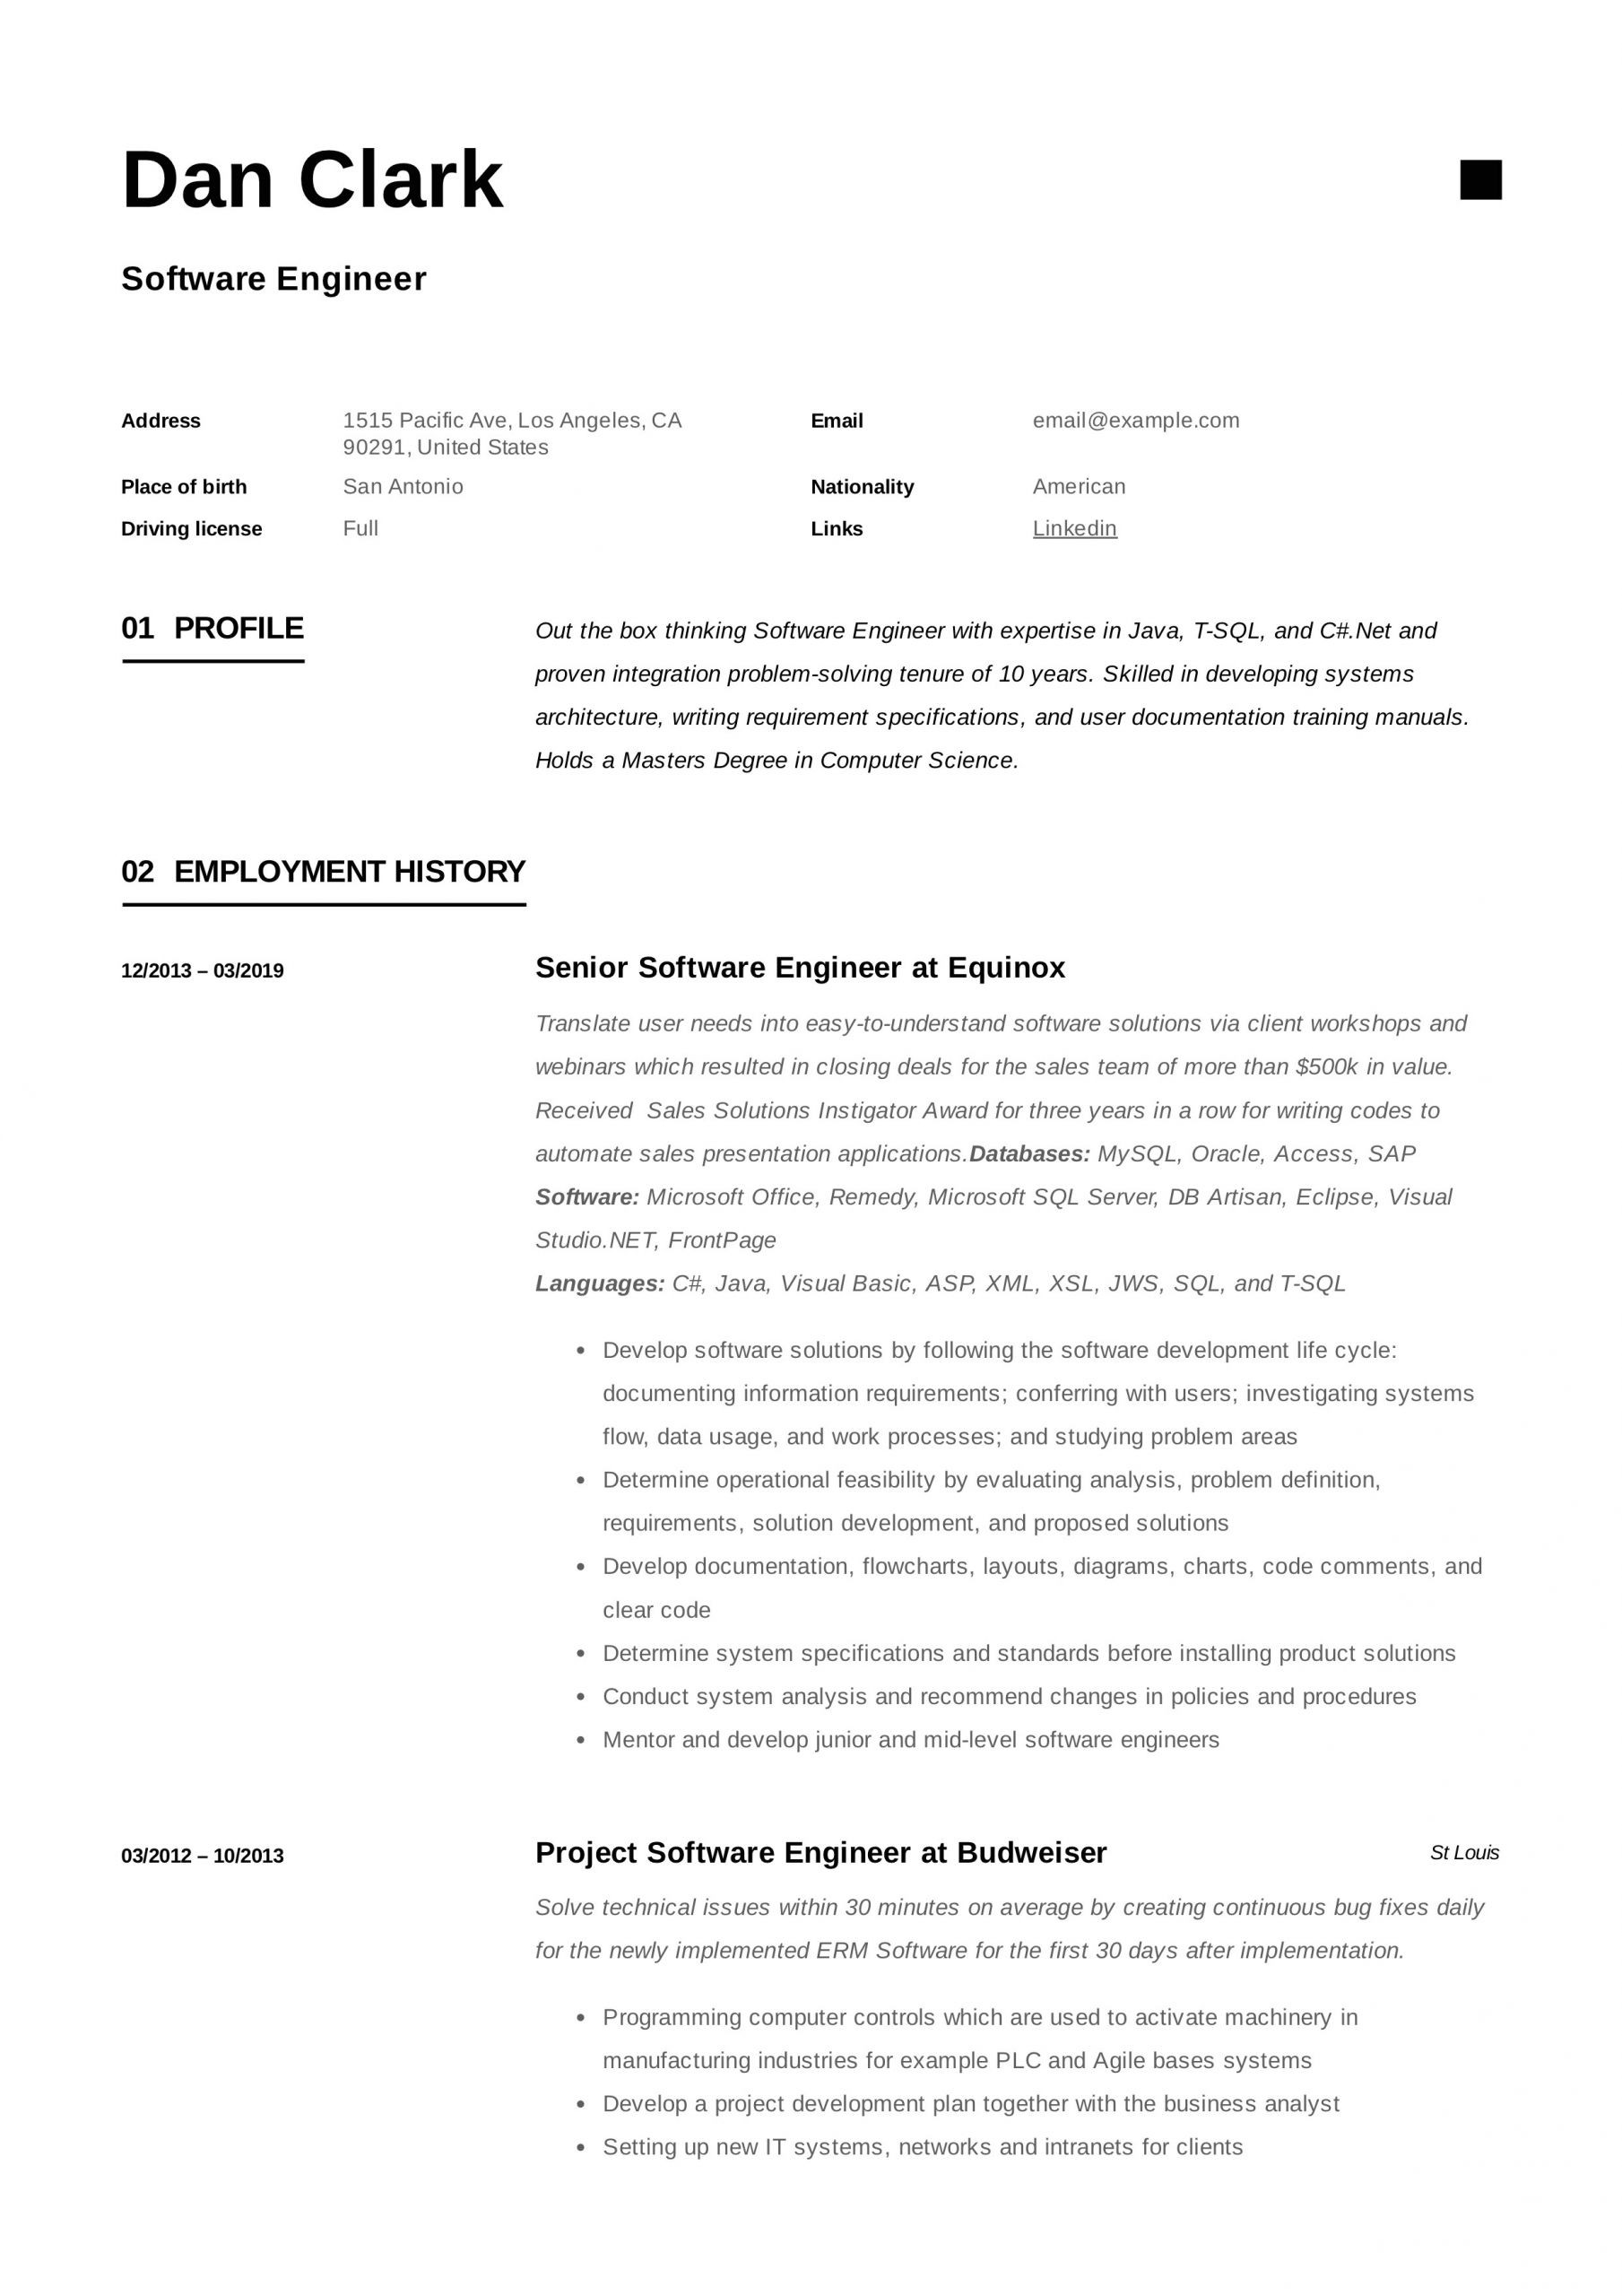 10 years experience software engineer resume